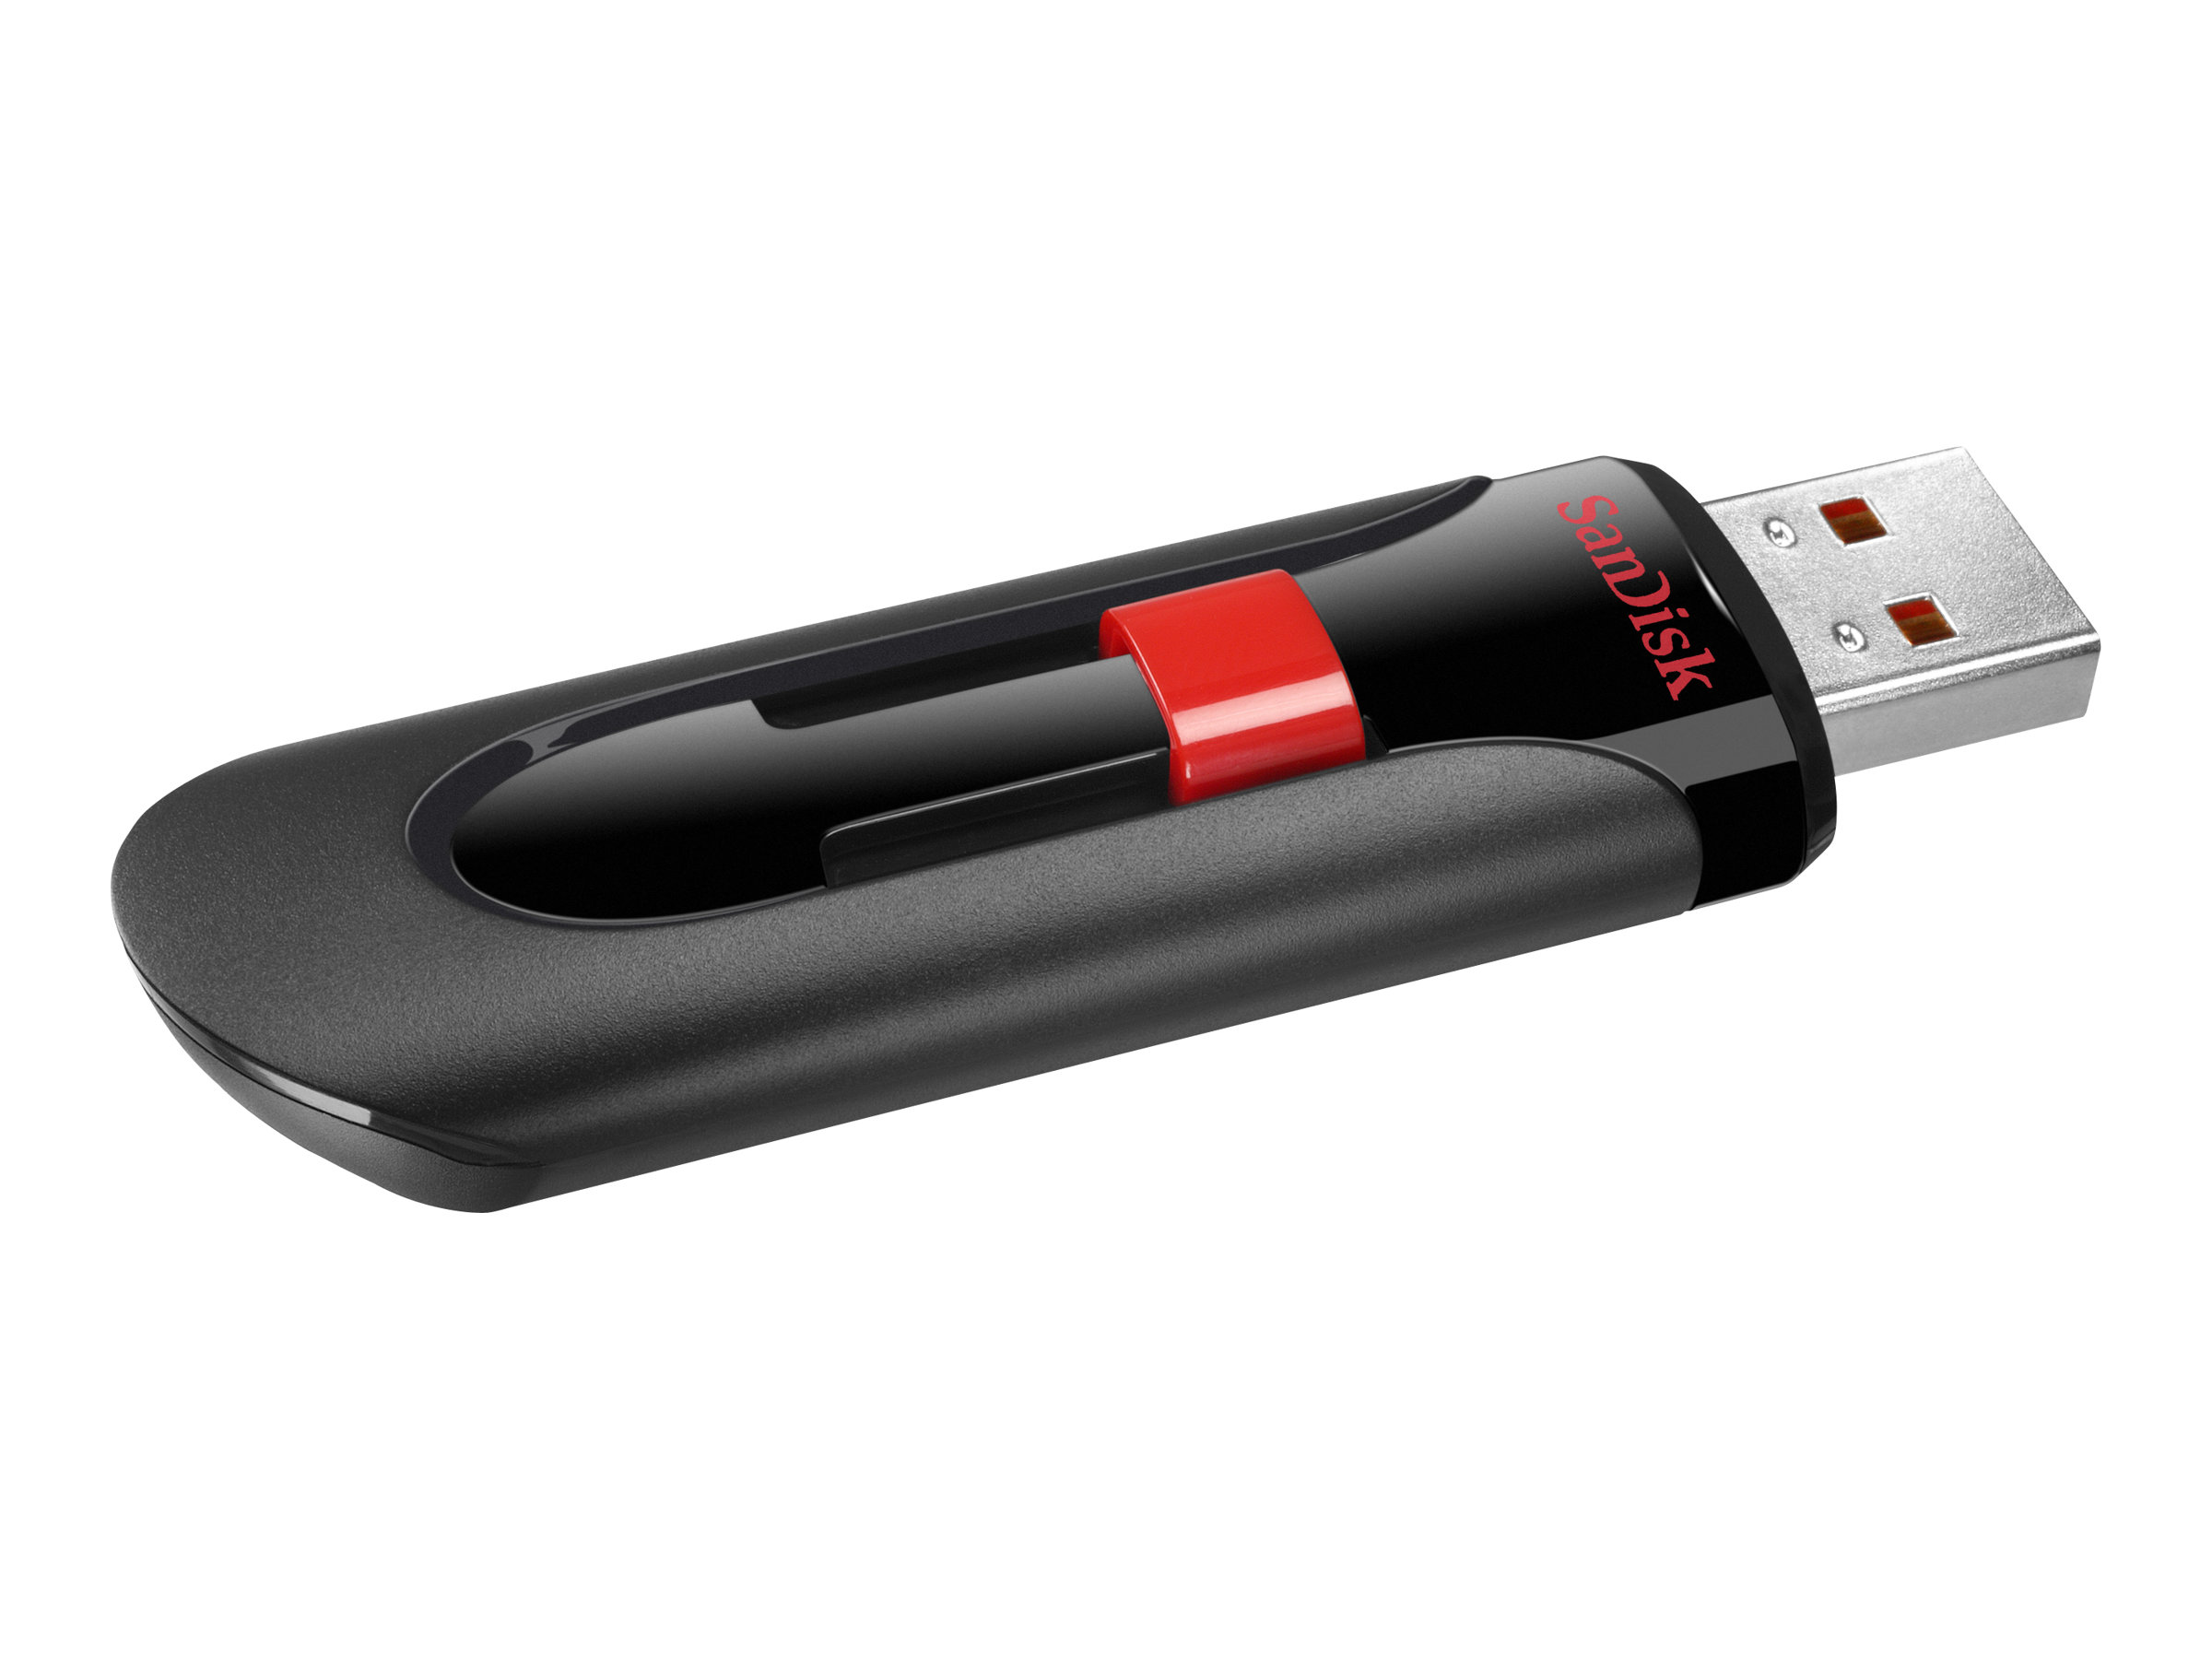 SanDisk Cruzer Glide 32 GB USB 2.0 Flash Drive - Black, Red - image 4 of 9